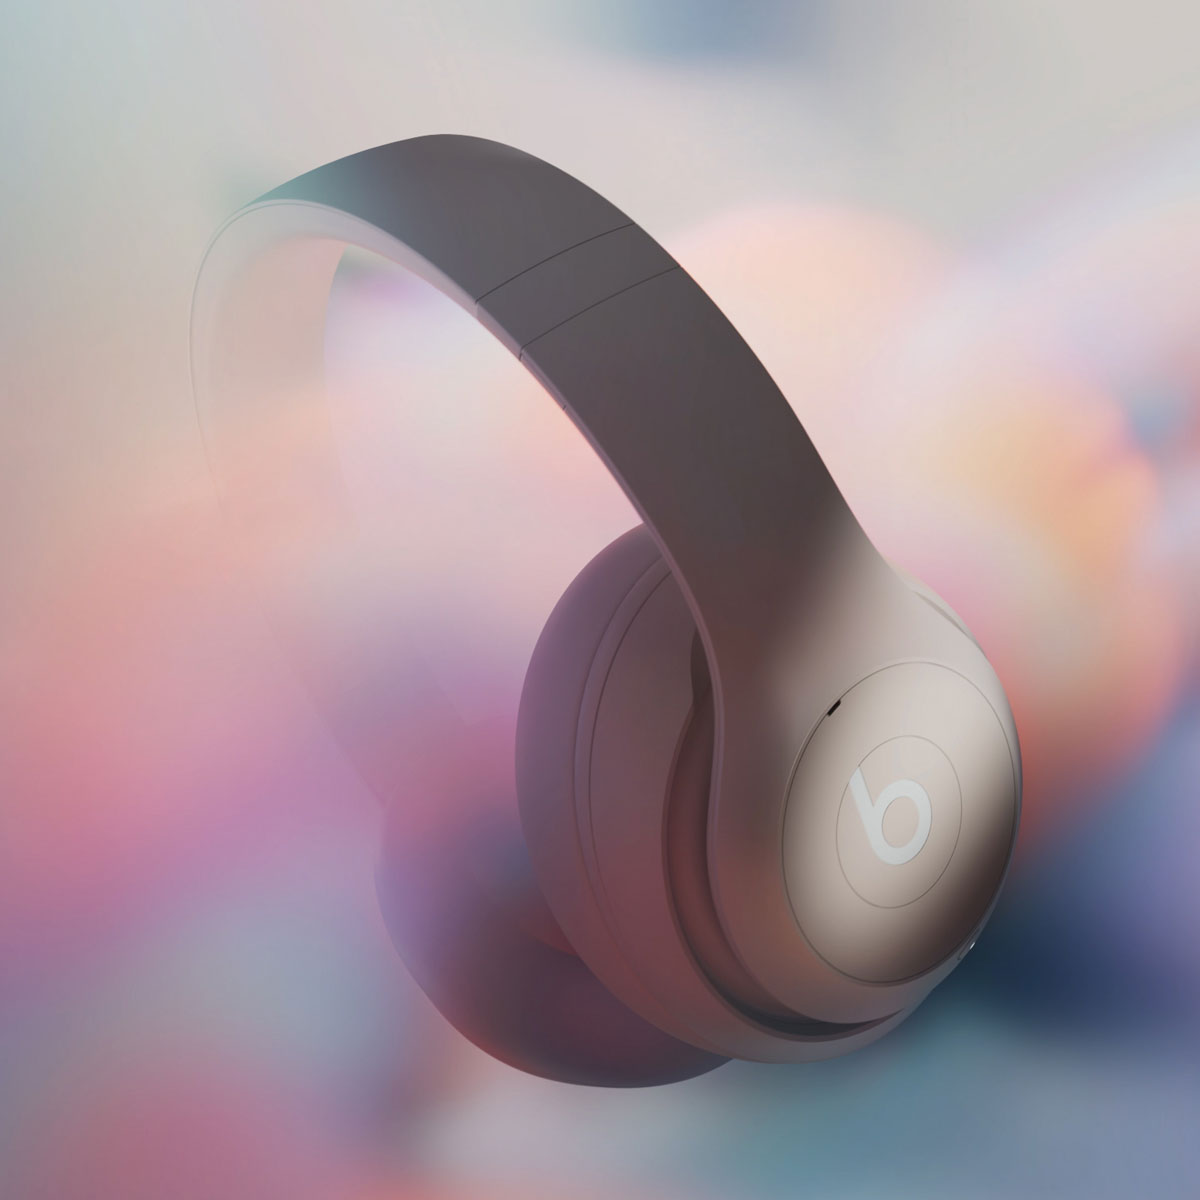 Beats Studio Wireless Headphones review: A pricey Bluetooth headphone with  premium sound - CNET